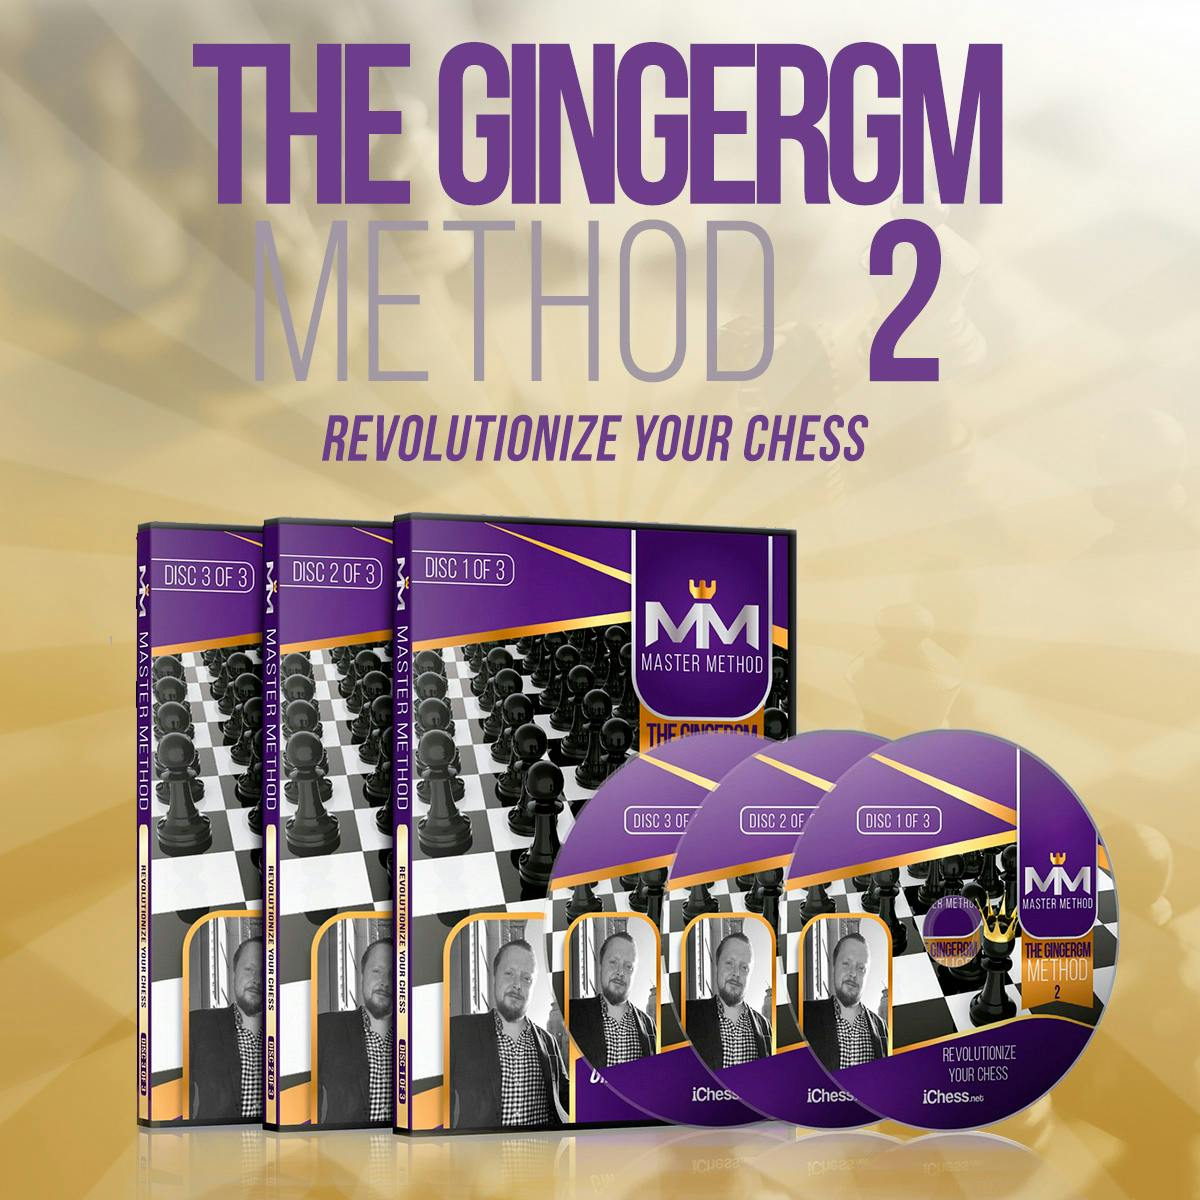 Revolutionize Your Chess (The Ginger GM Method 2)